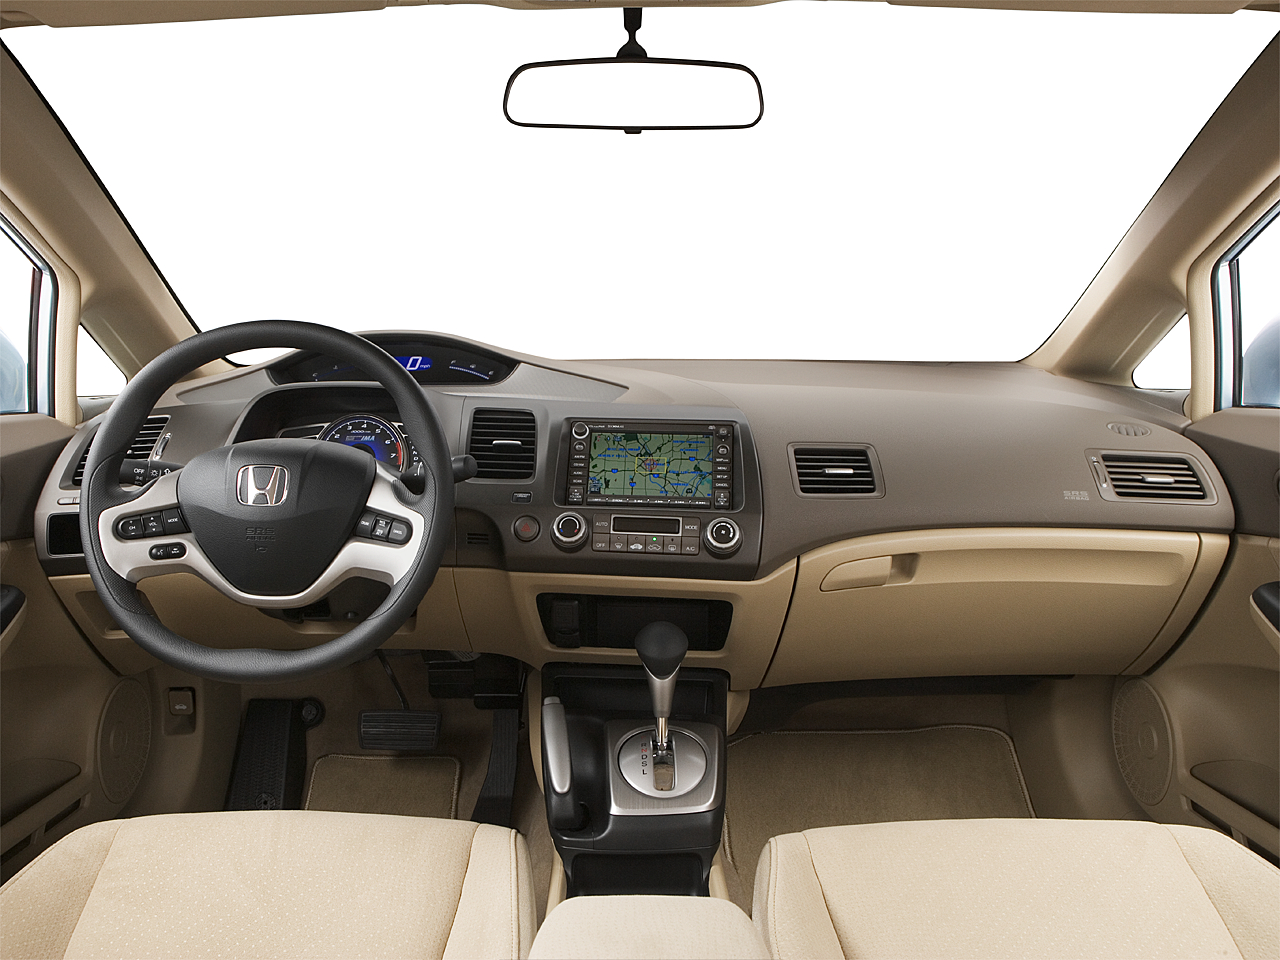 2007 Honda Civic Hybrid 4dr Sedan - Research - GrooveCar